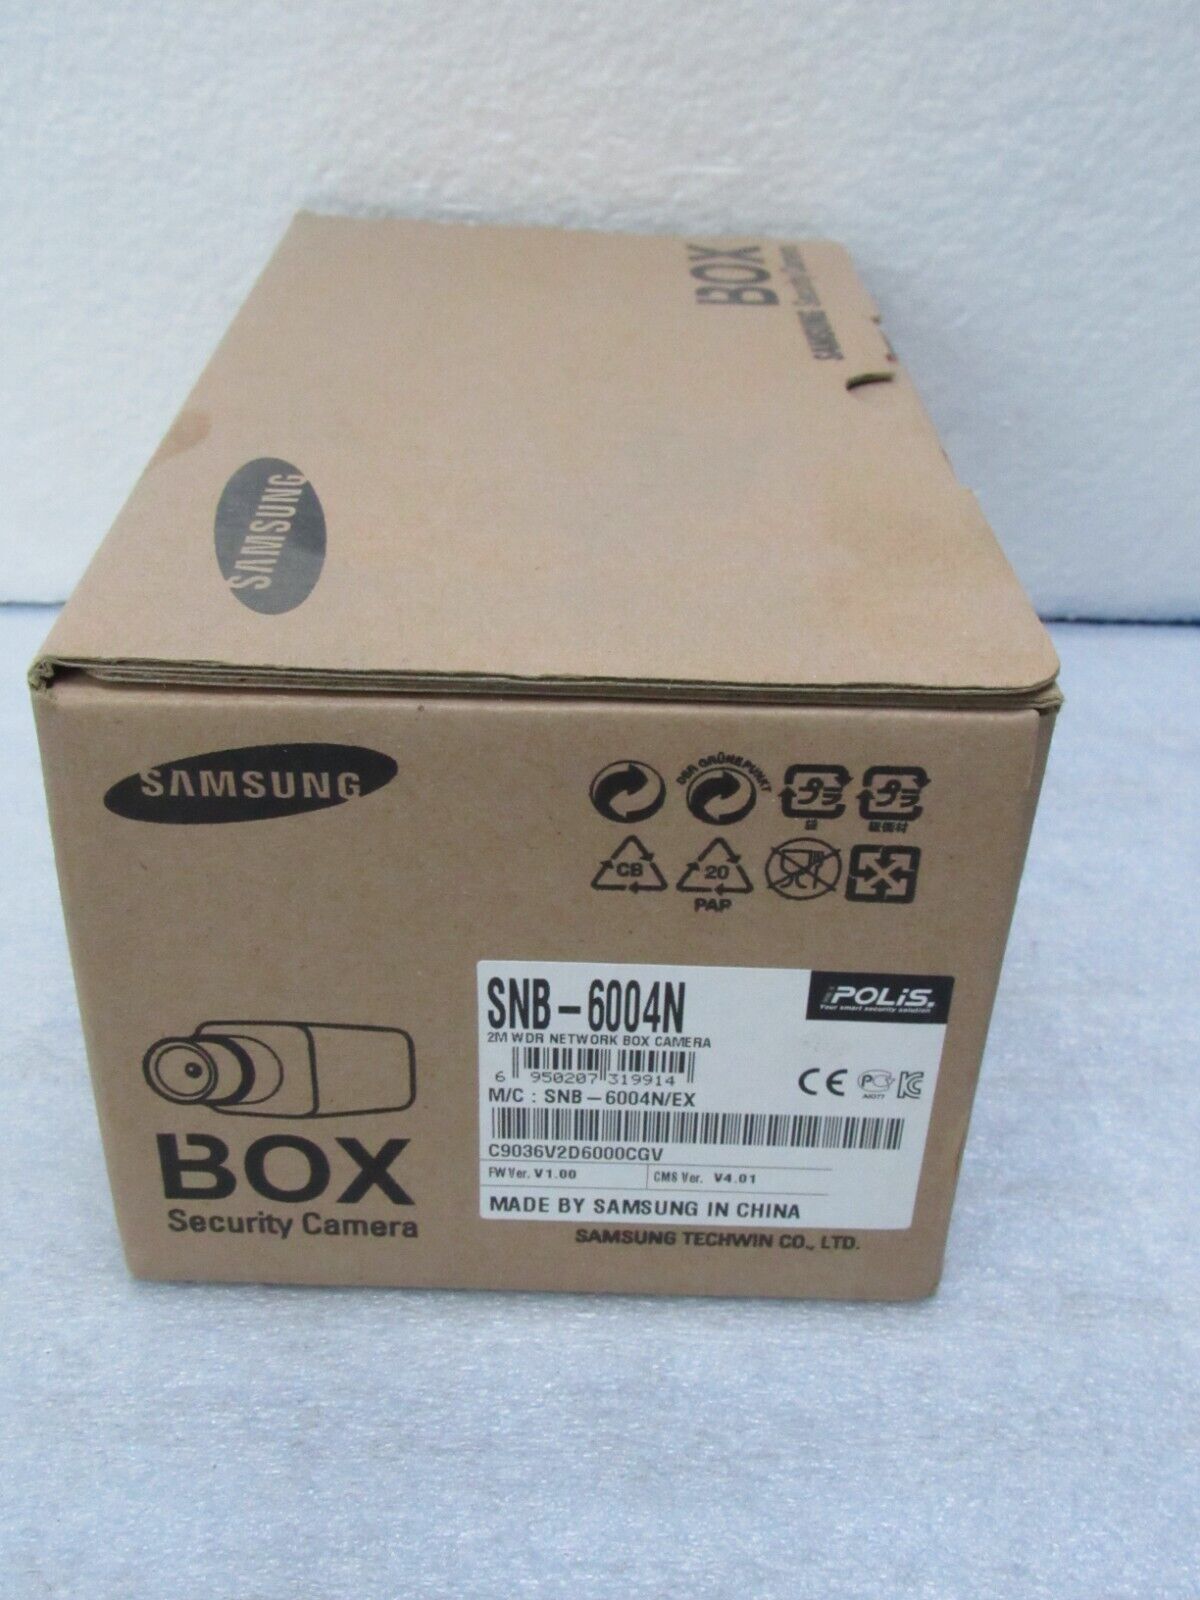 Samsung SNB-6004N 2M (1920x1080) Resolution, 1080p Full HD [CTA]